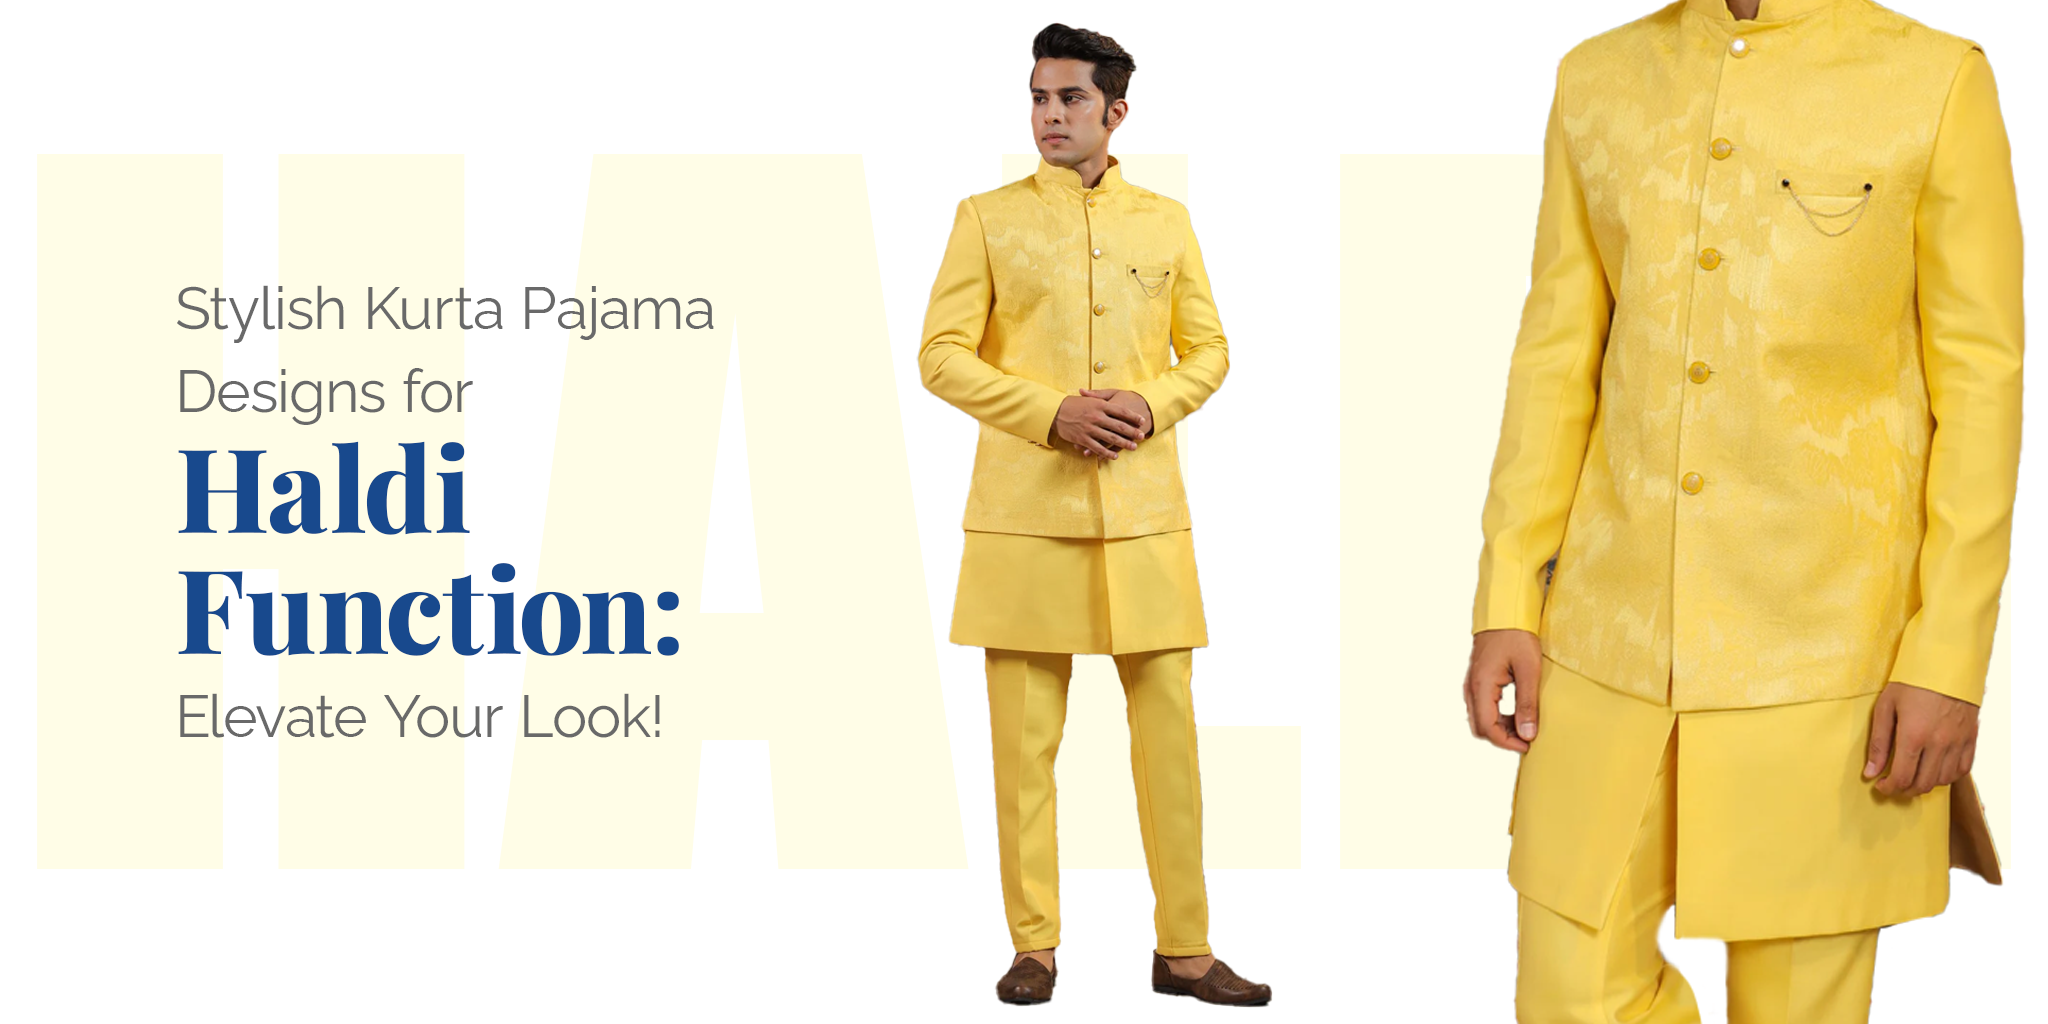 Stylish Kurta Pajama Designs for Haldi Function: Elevate Your Look!